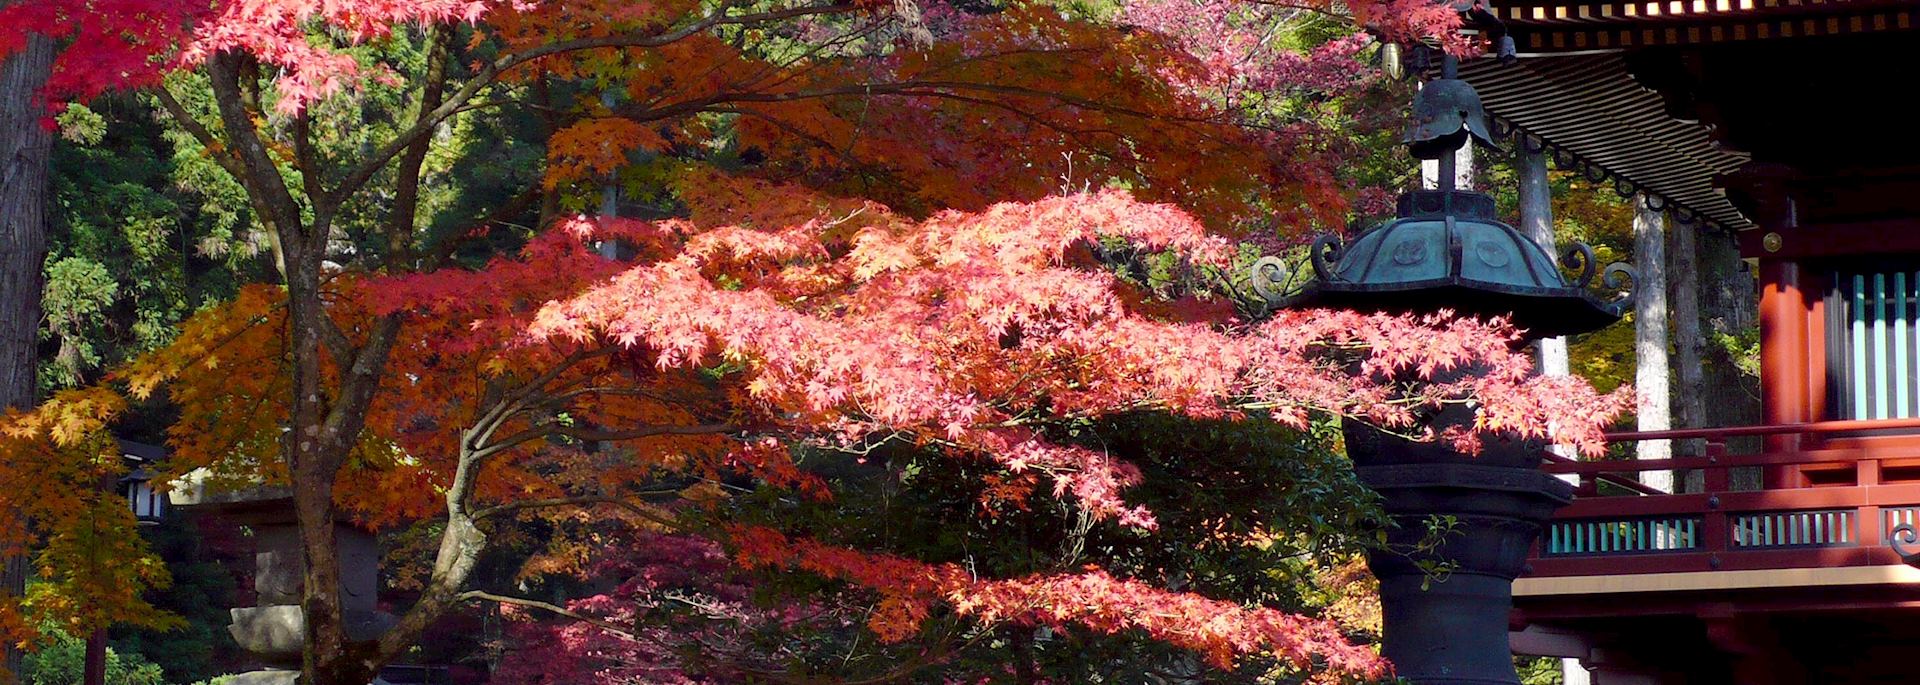 Autumn leaves in Nikko, Japan